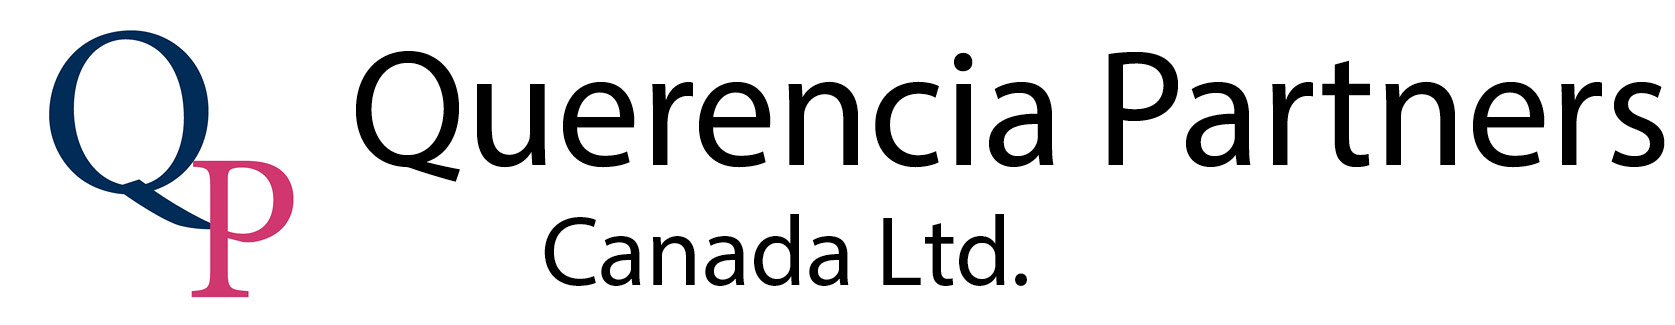 Querencia Partners Canada